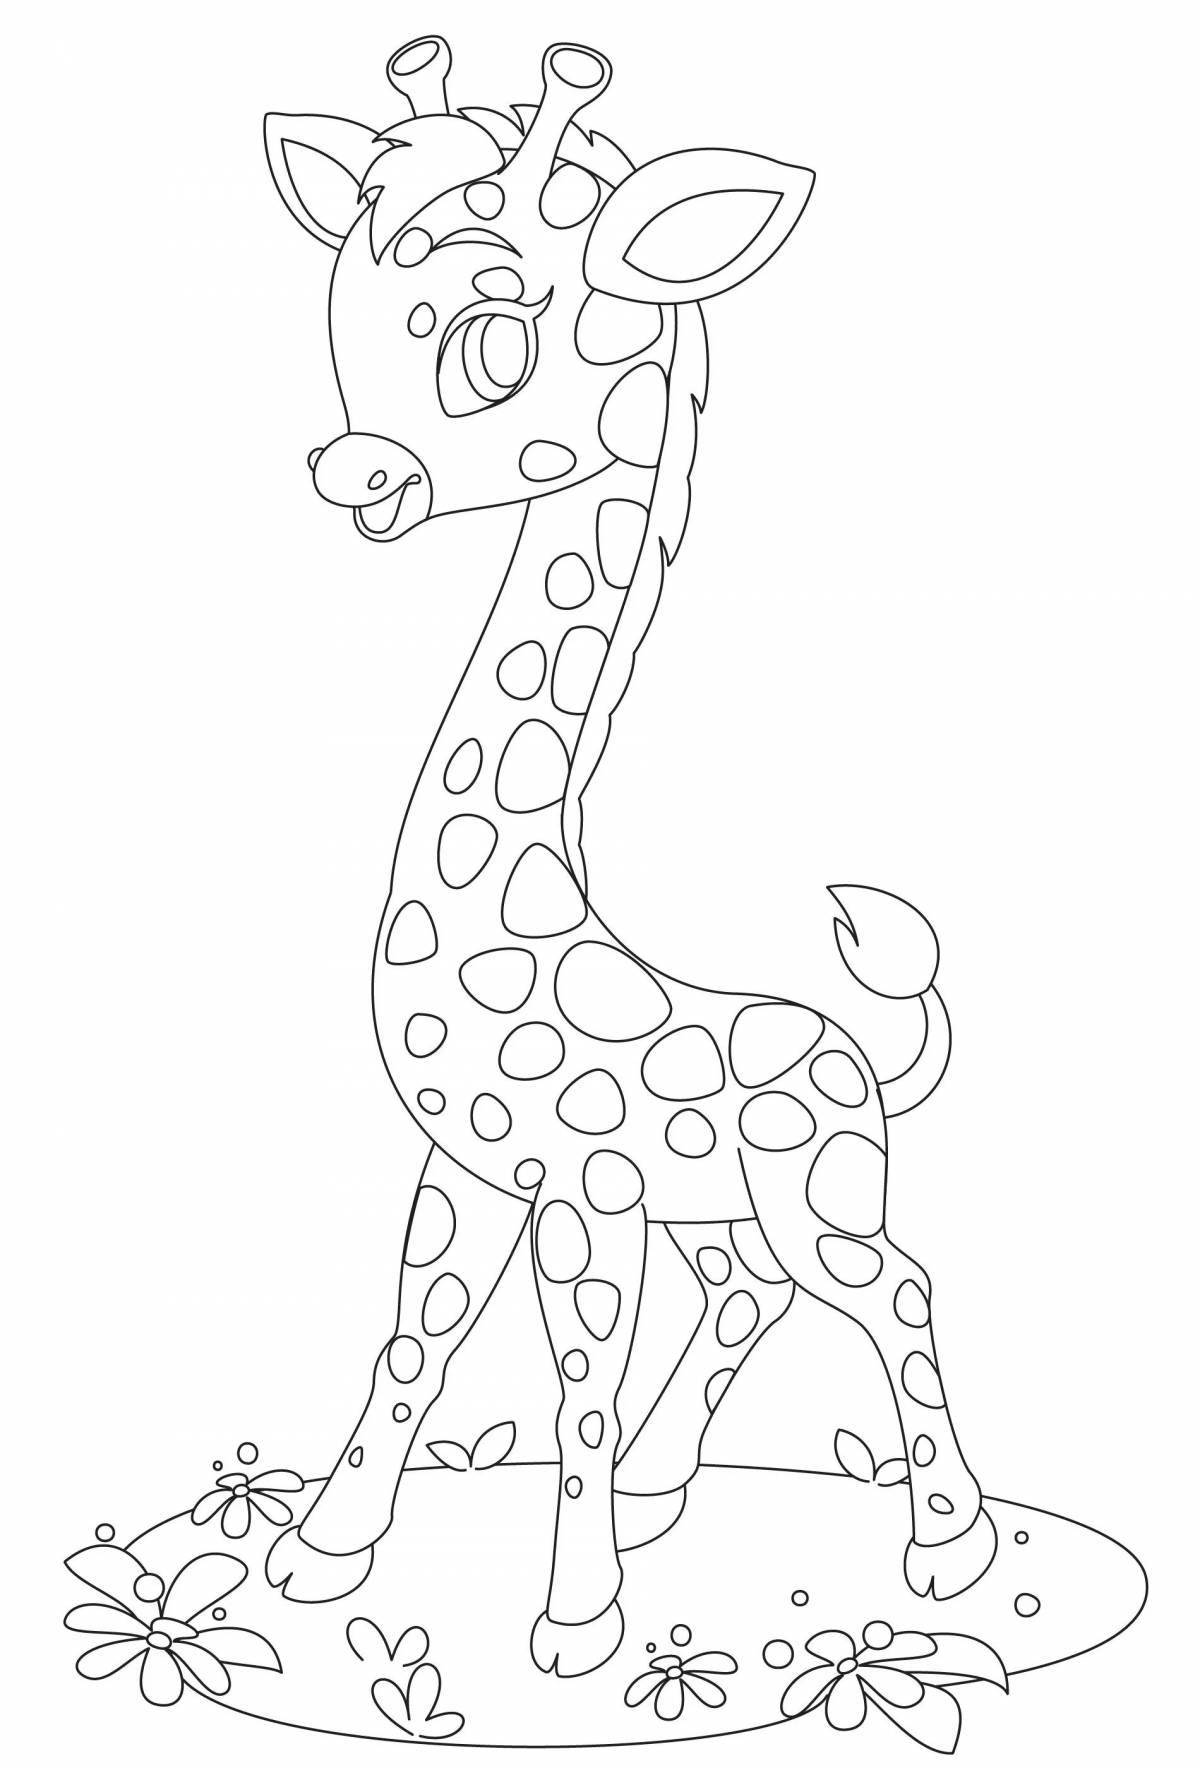 Colorful giraffe coloring for pre-k